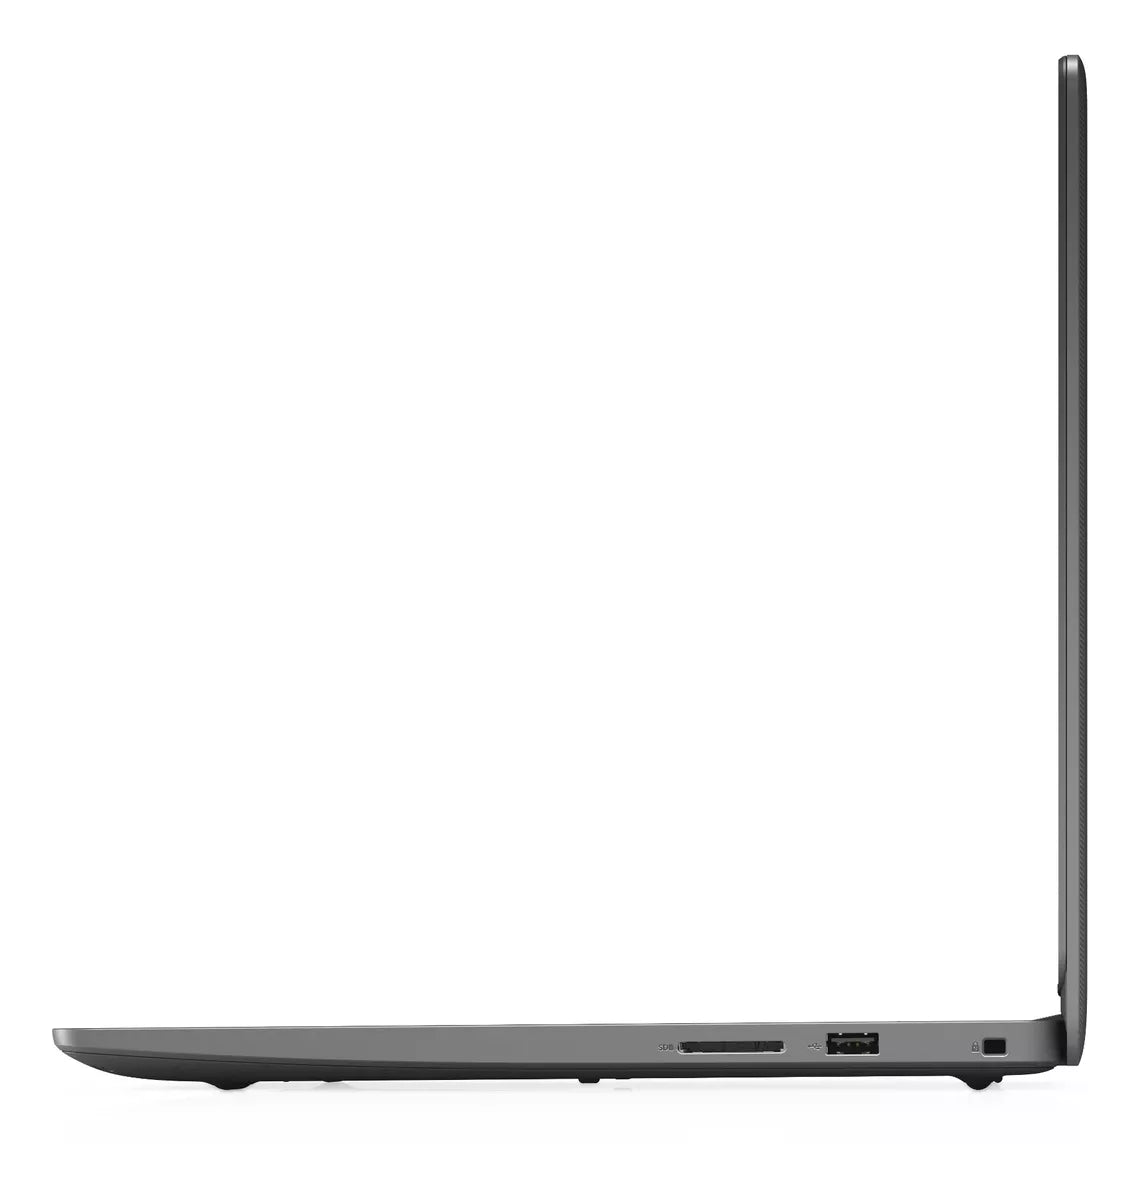 Dell Vostro Laptop 14.1" Core i5-1130g5 8GB 256GB SSD+500GB HDD Ref +A WF052DEBK